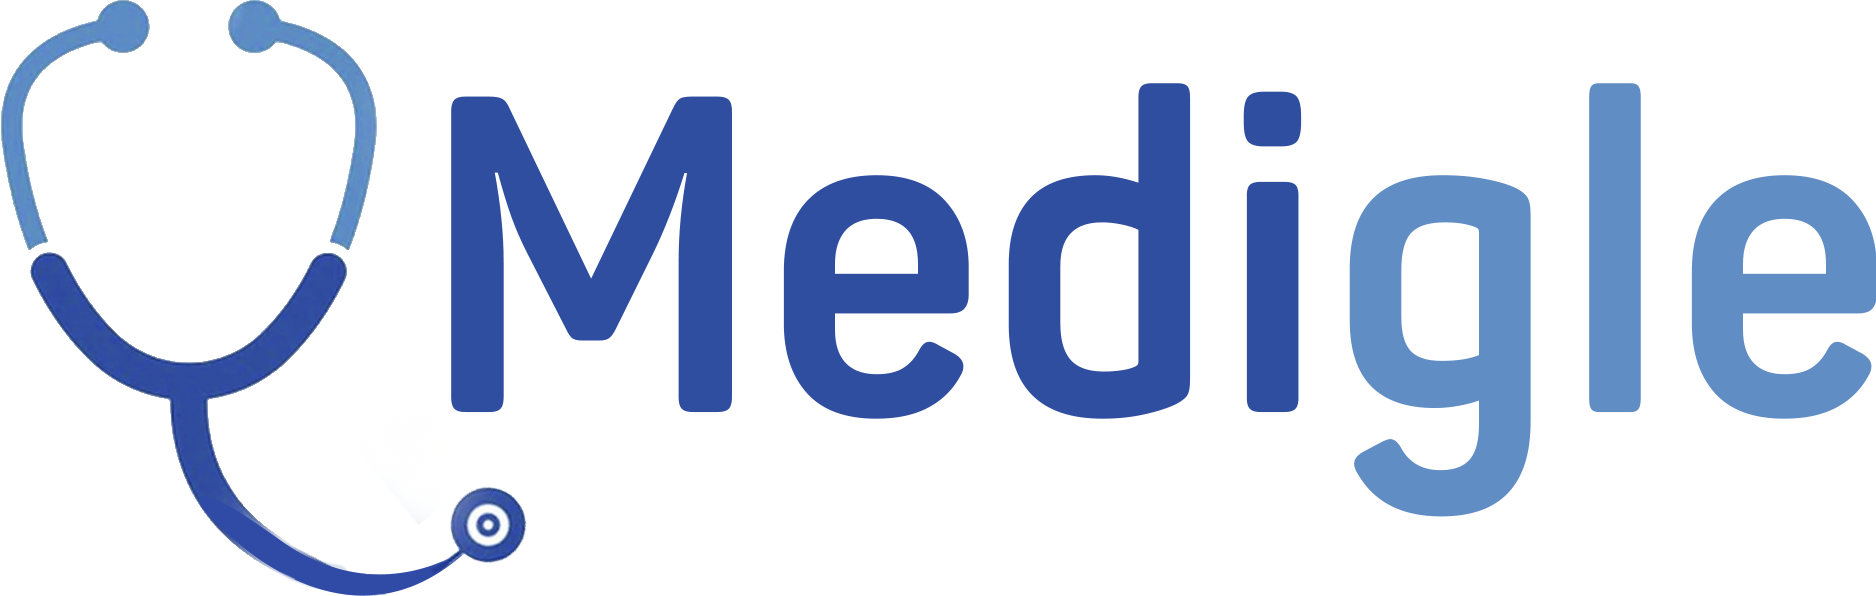 Medigle logo